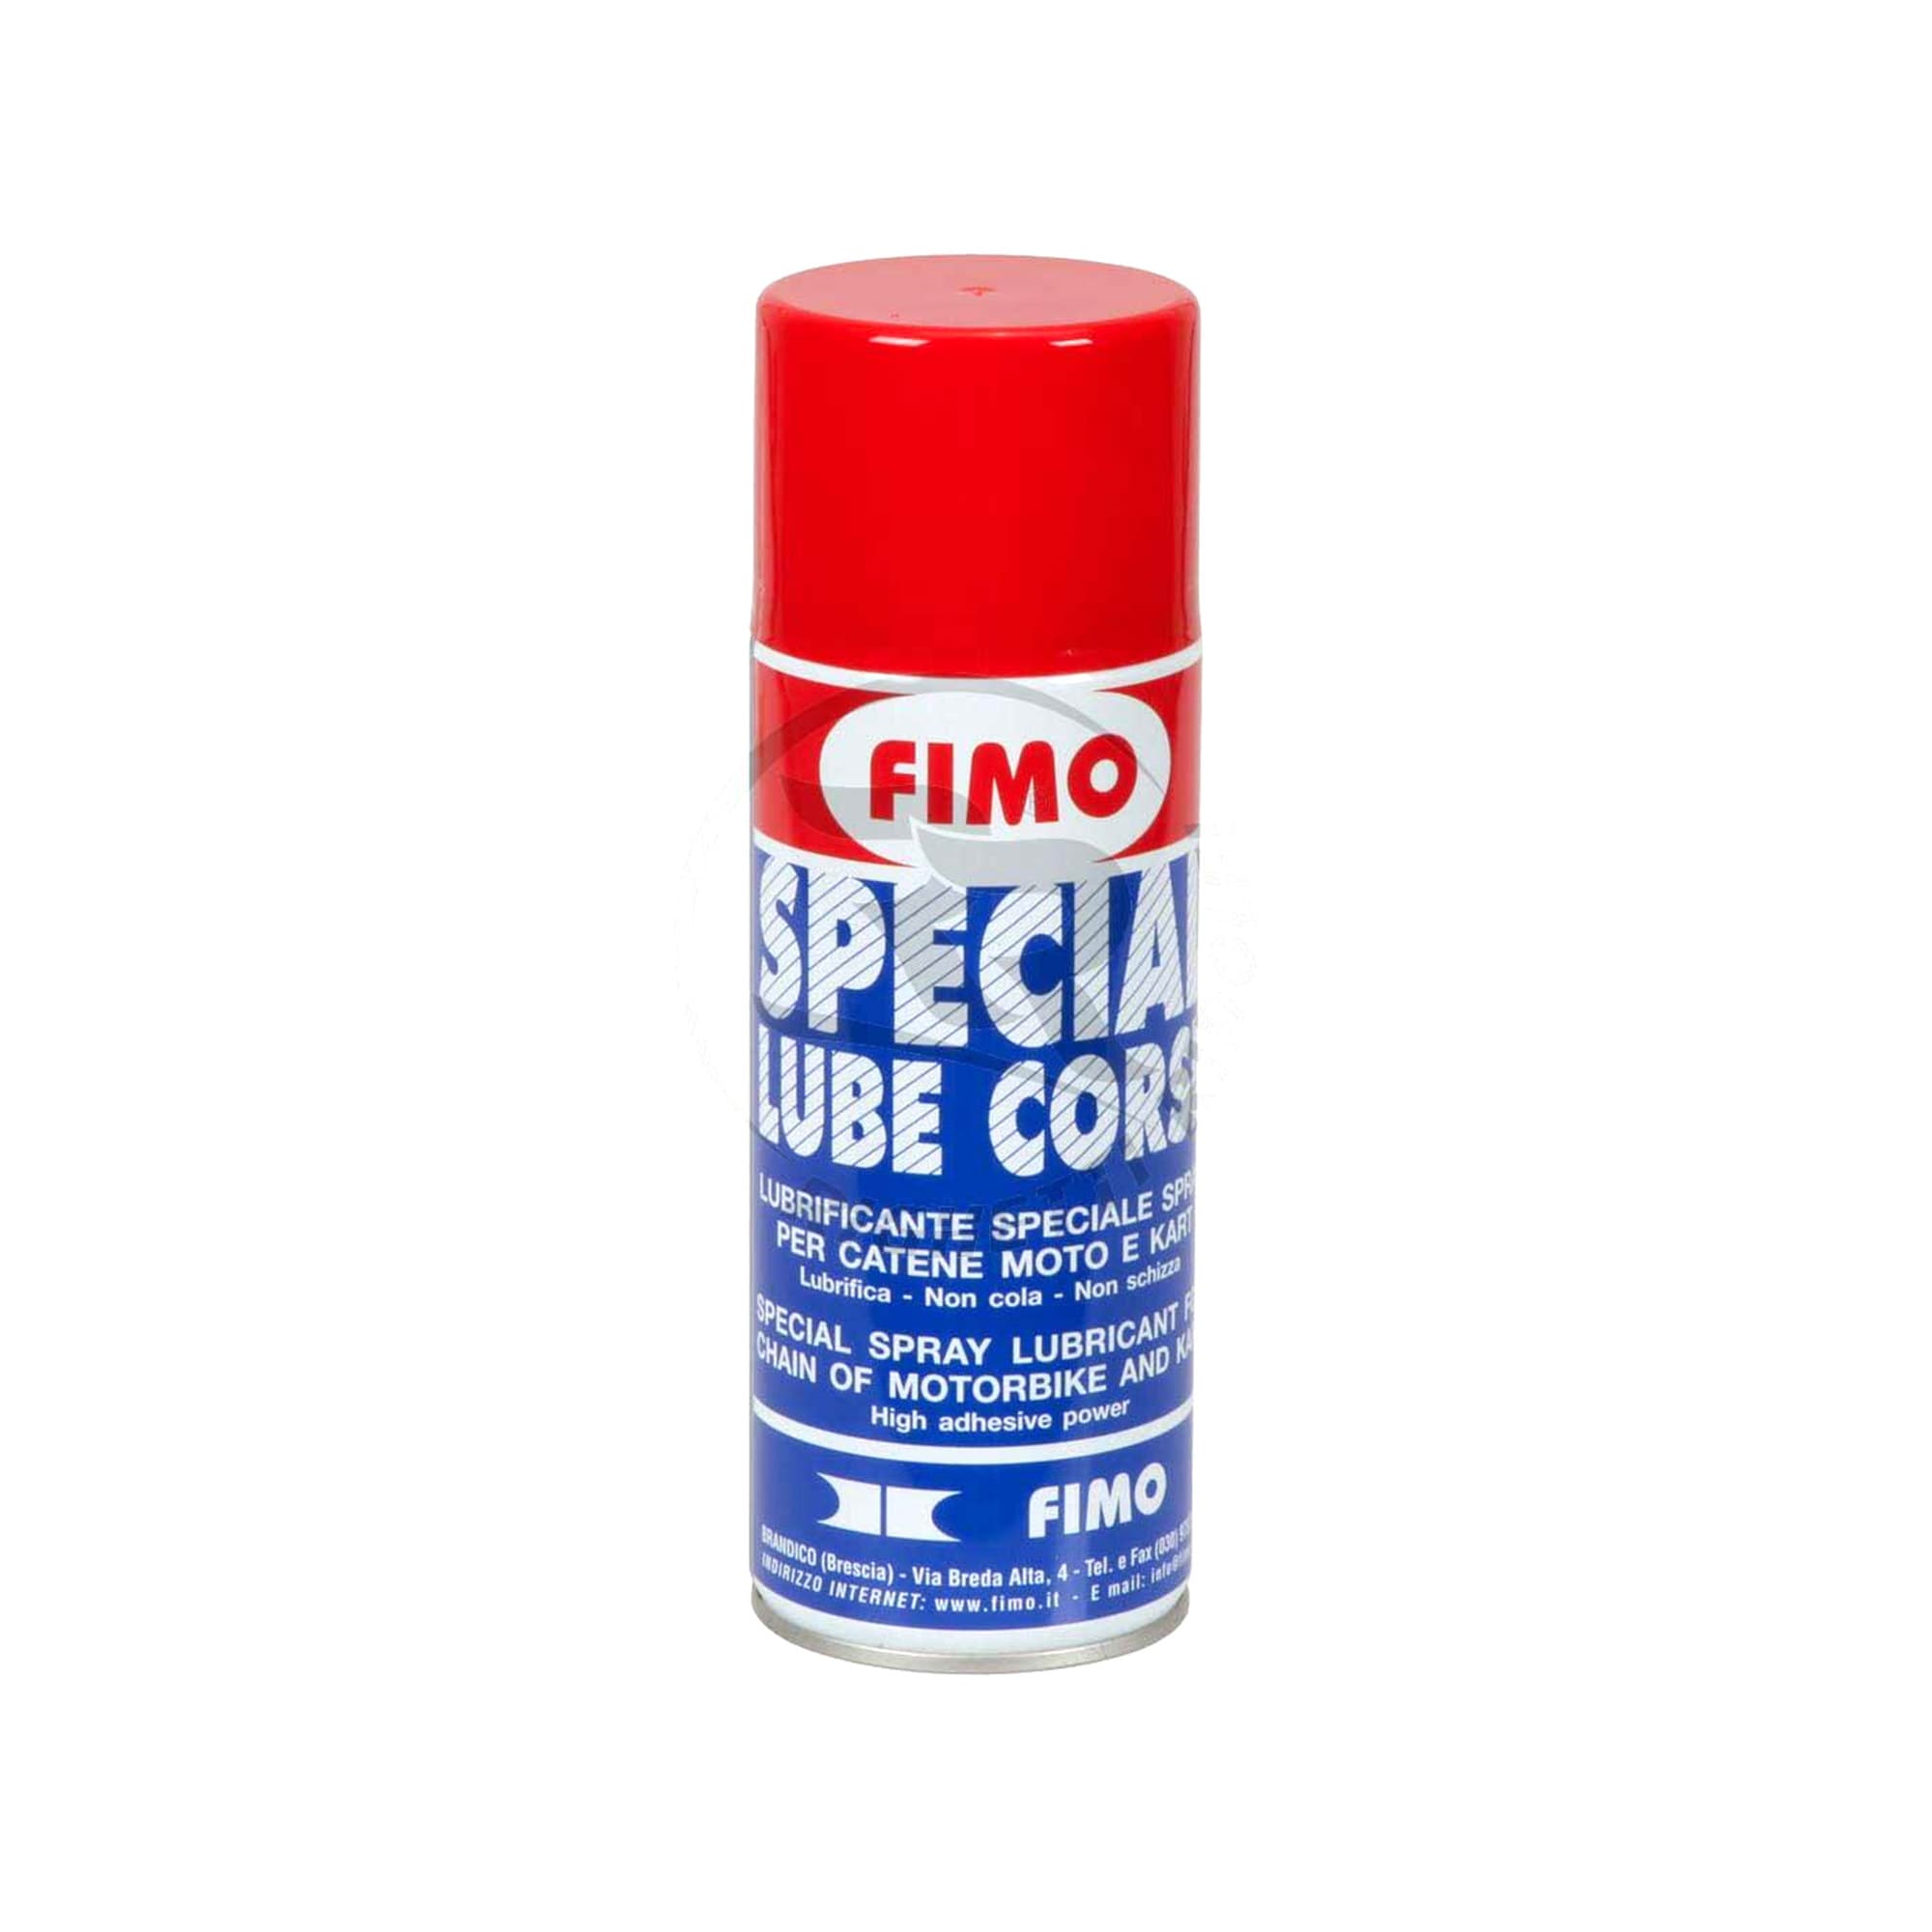 Kedjespray FI.MO Special Lube Corse 400 ml